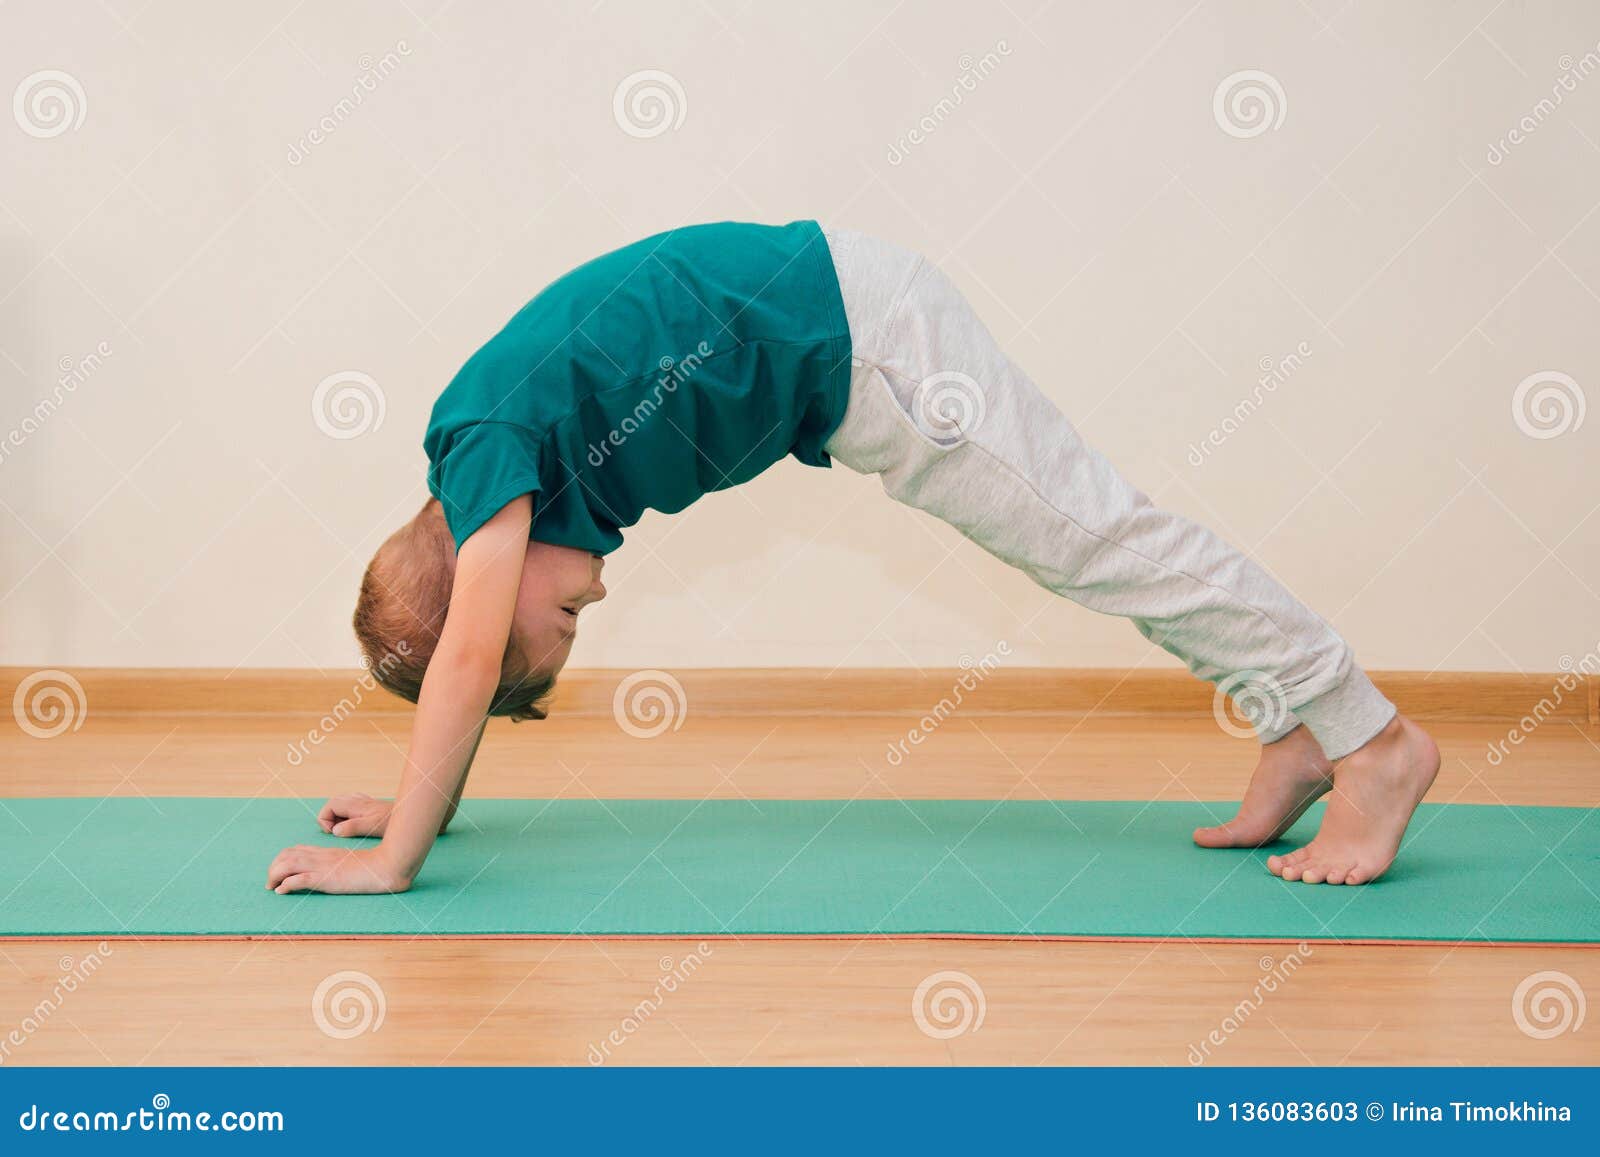 Small Boy On Yoga Mat Home Stock Photo 1703802922